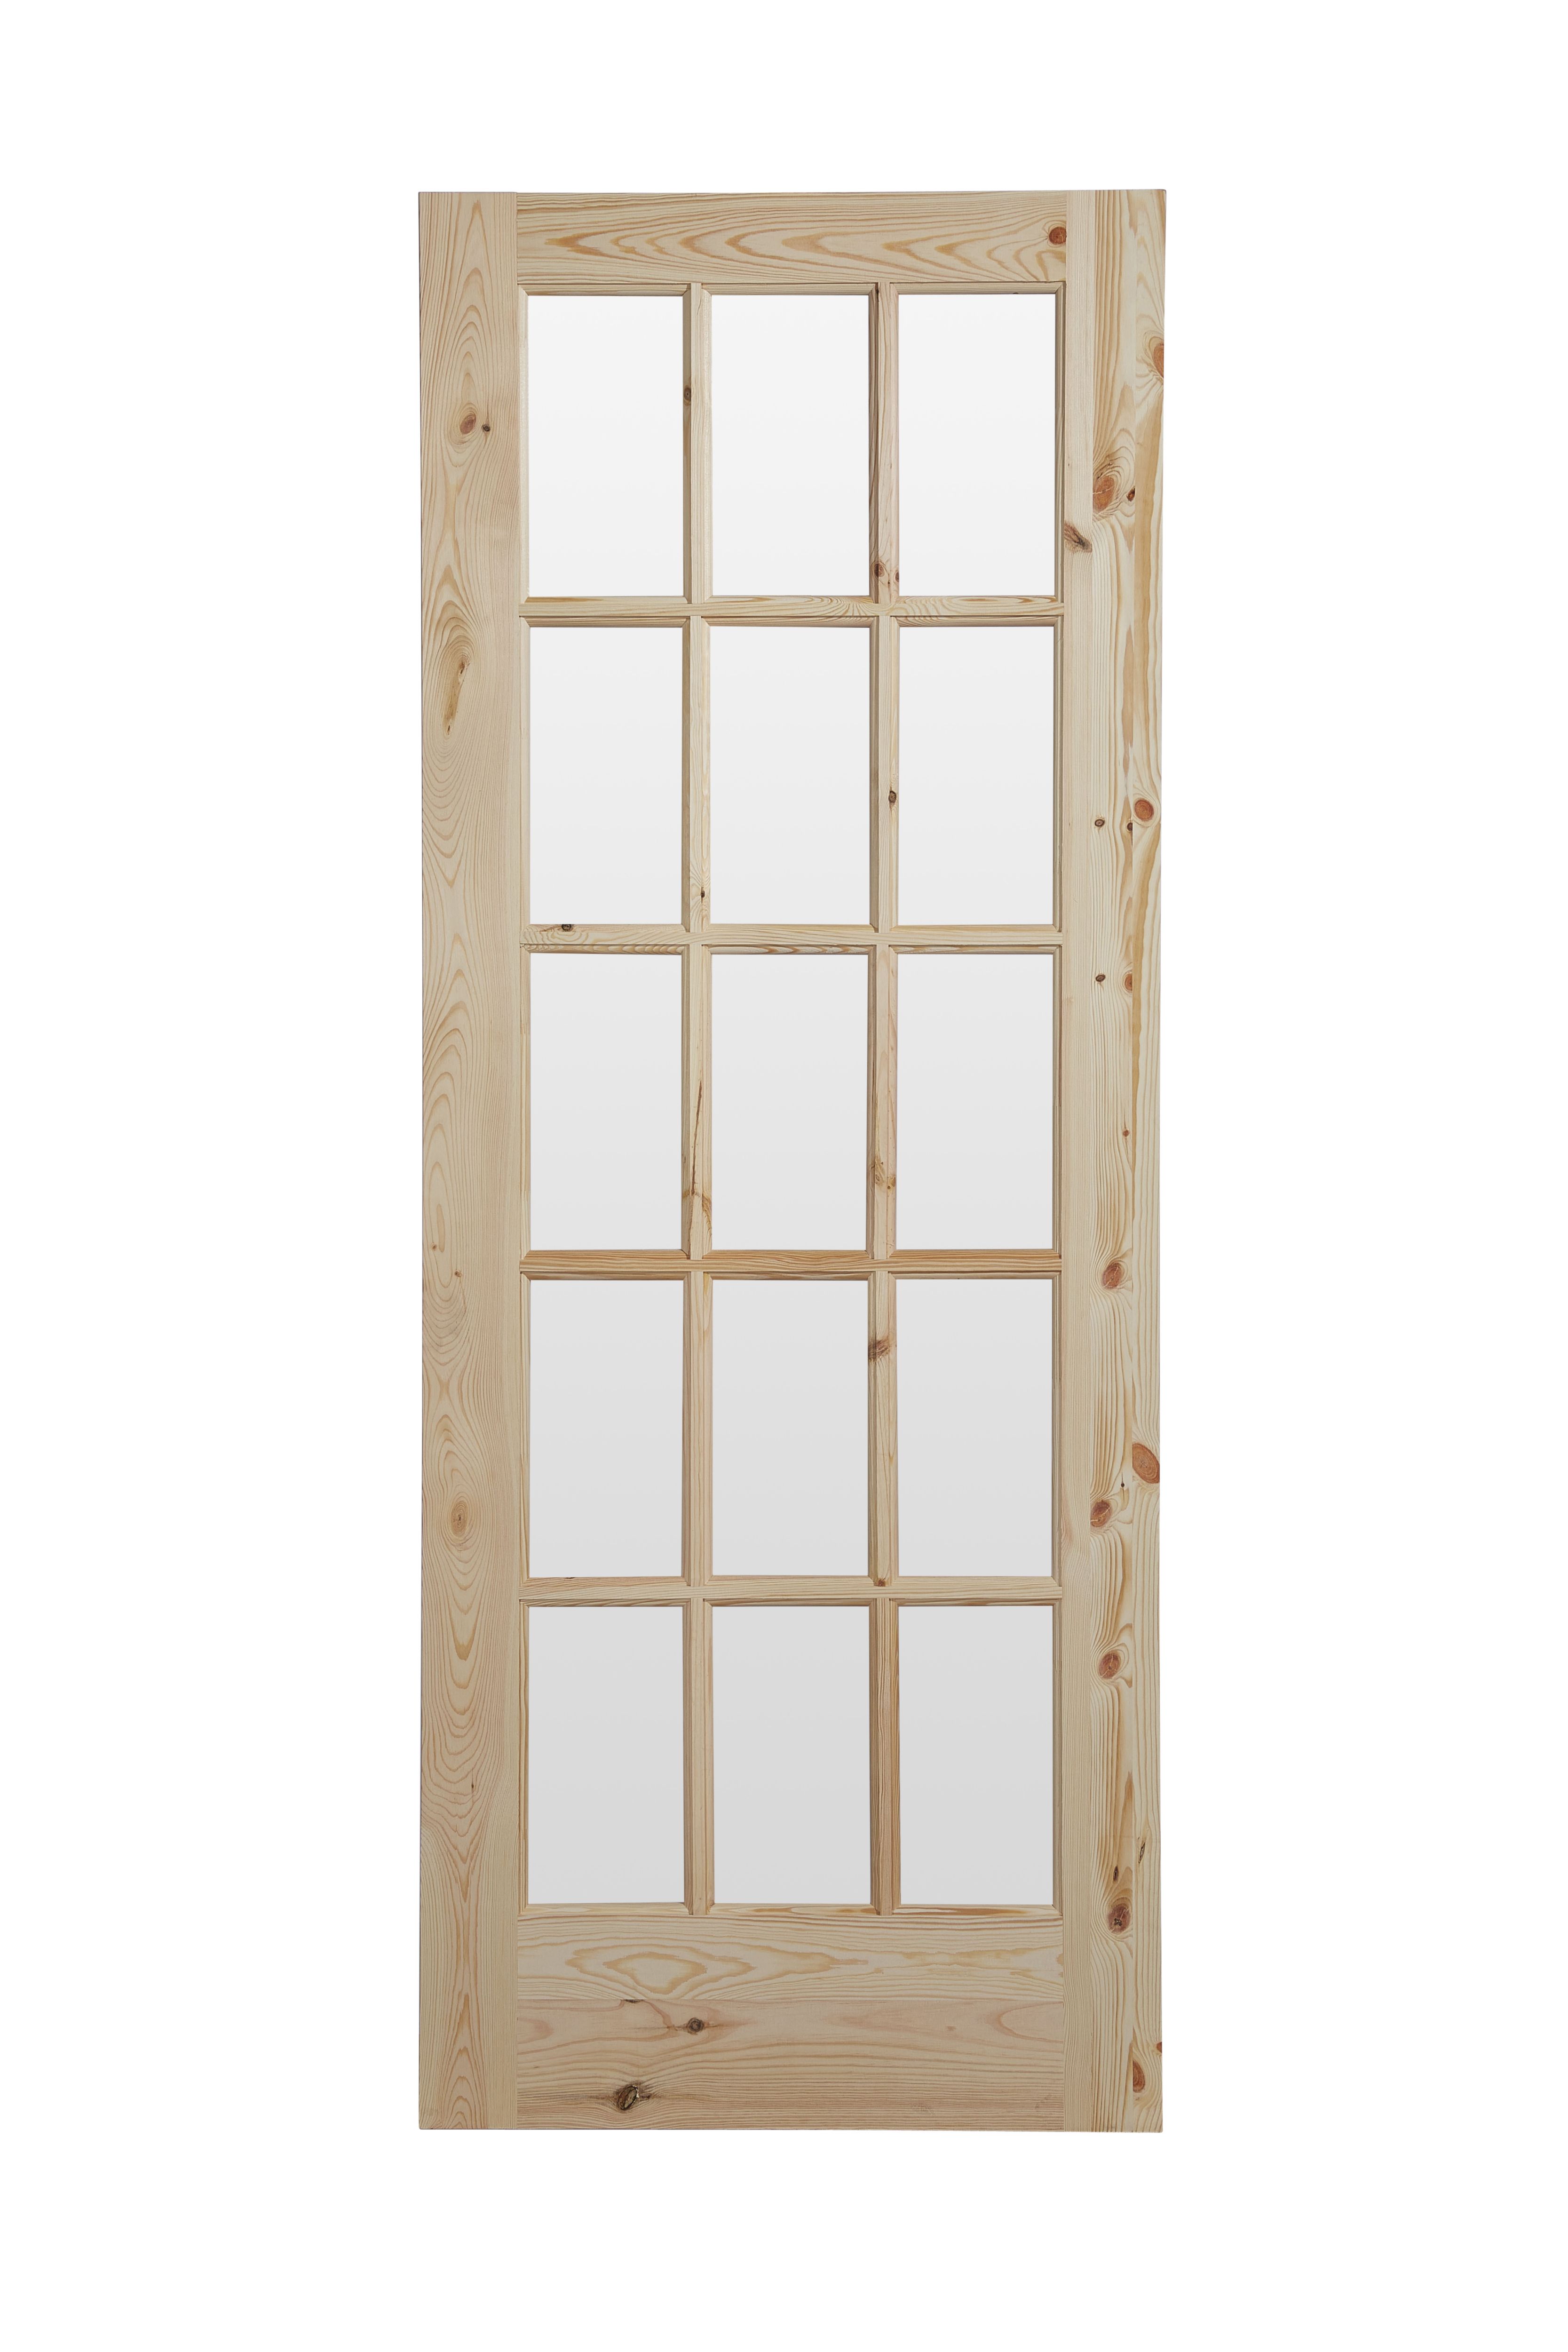 15 Lite Glazed Internal Door, (H)2032mm (W)813mm (T)35mm